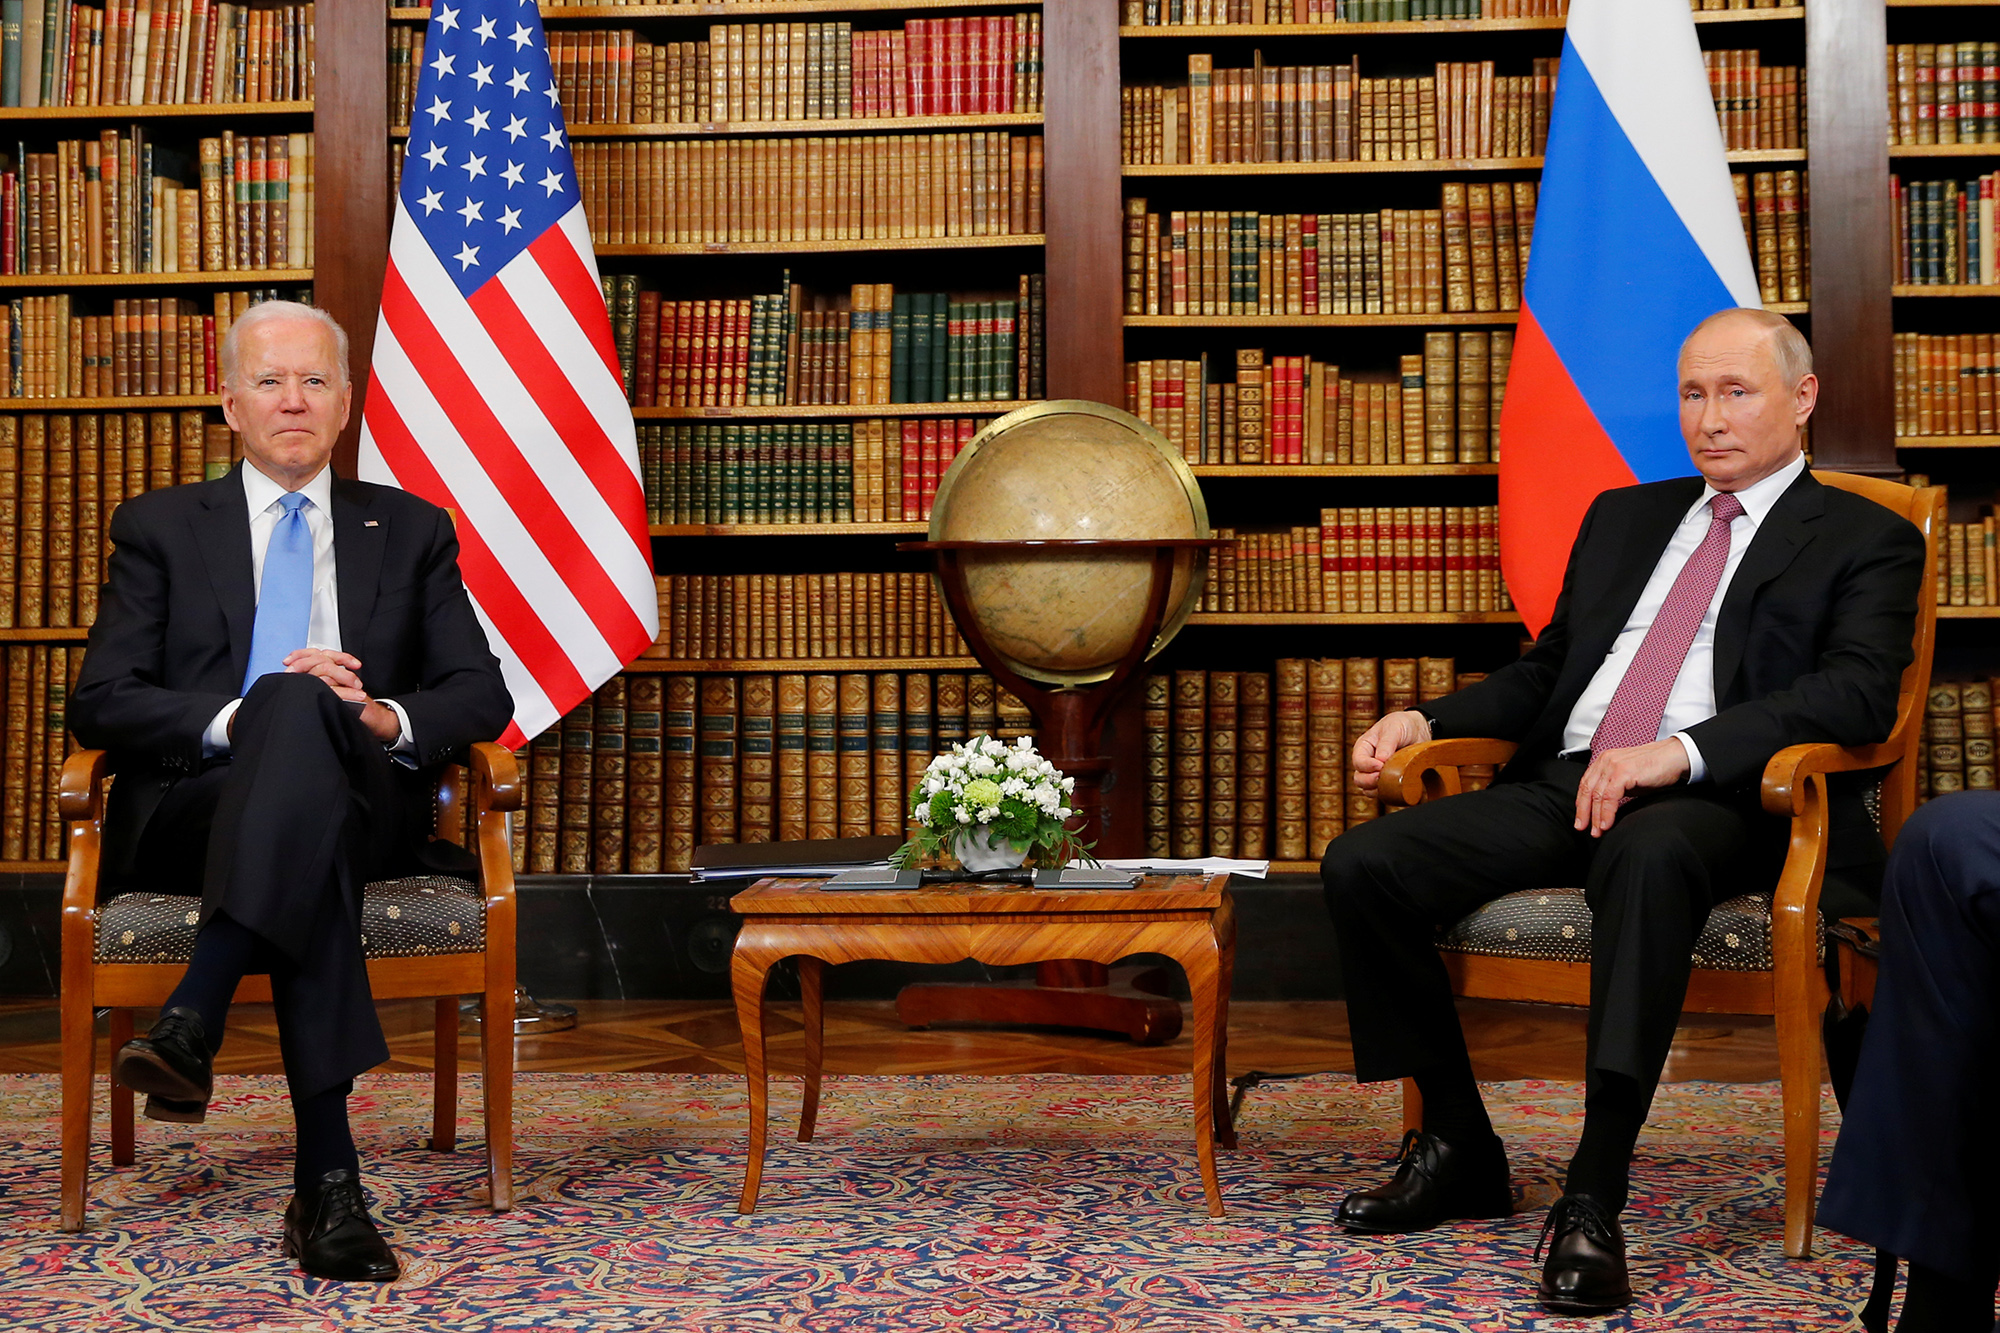 President Joe Biden and Russia's President Vladimir Putin